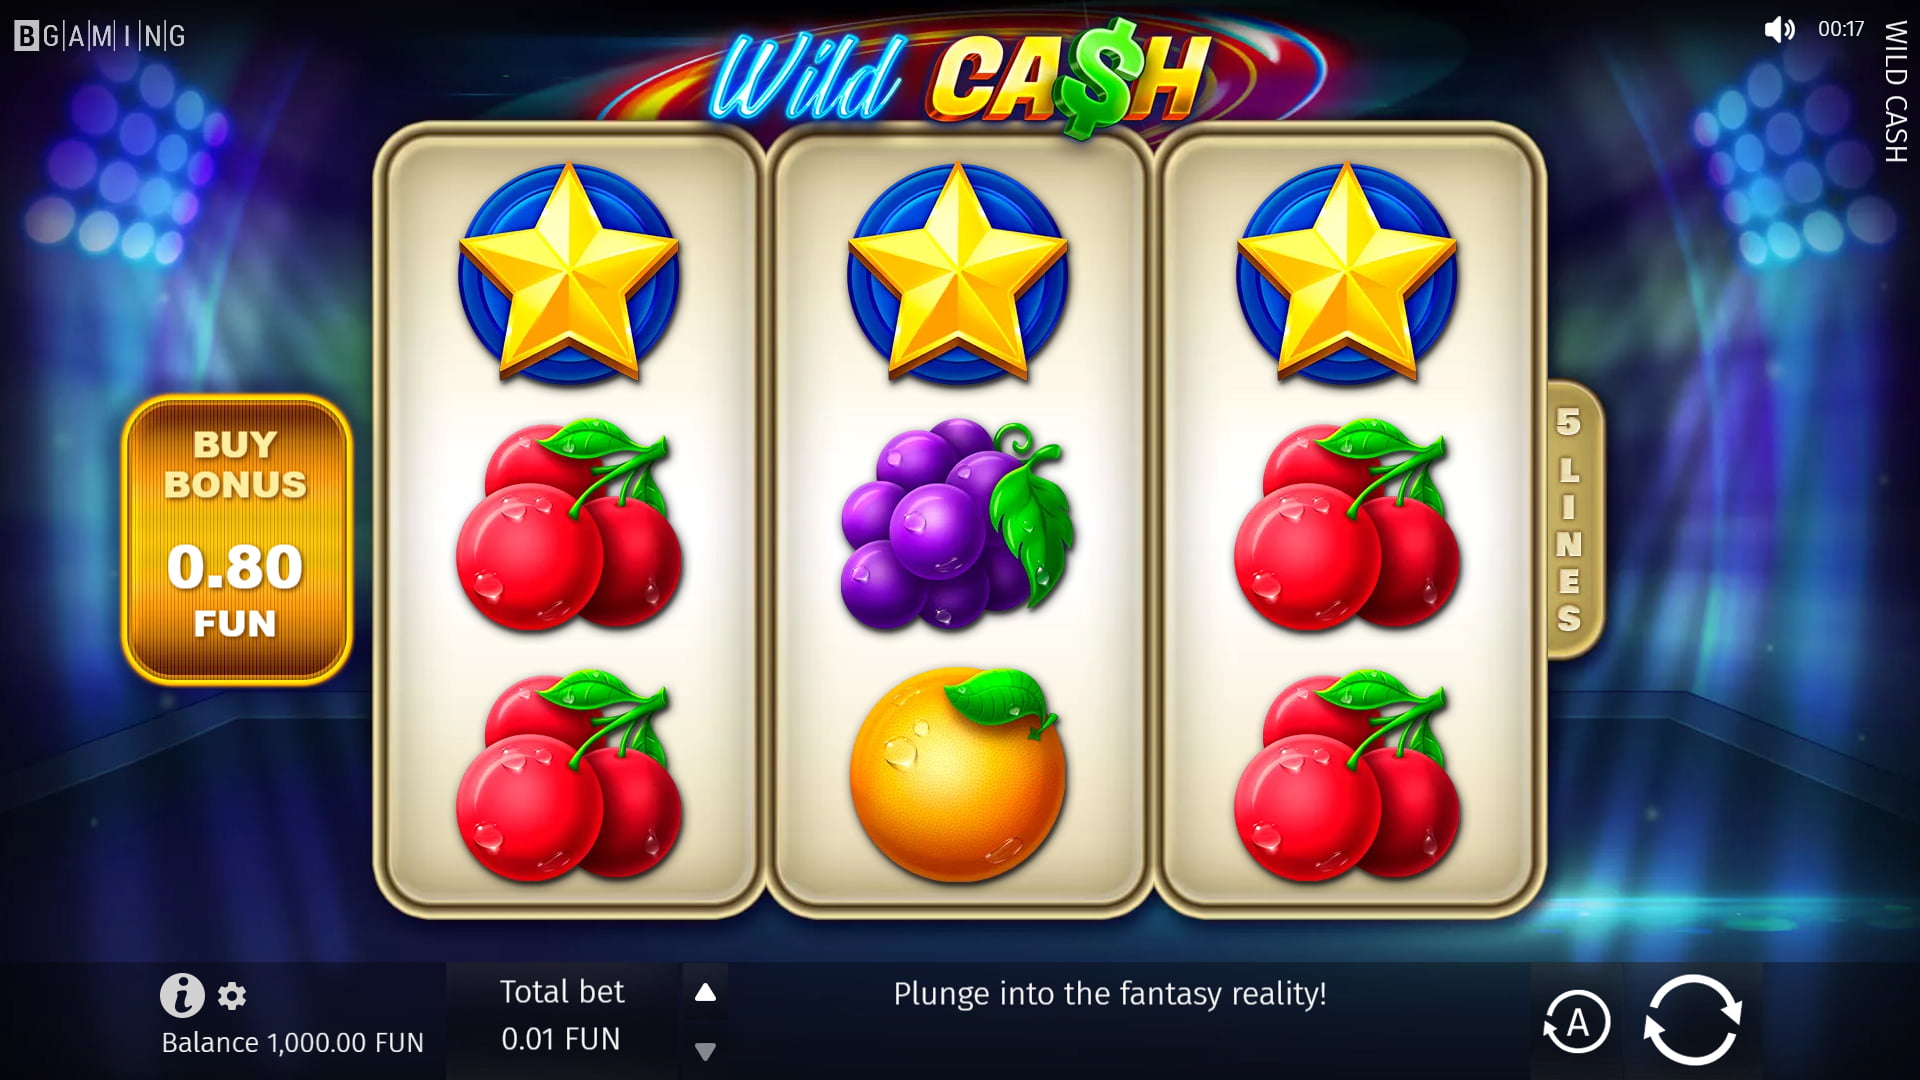 Wild Cash Slot